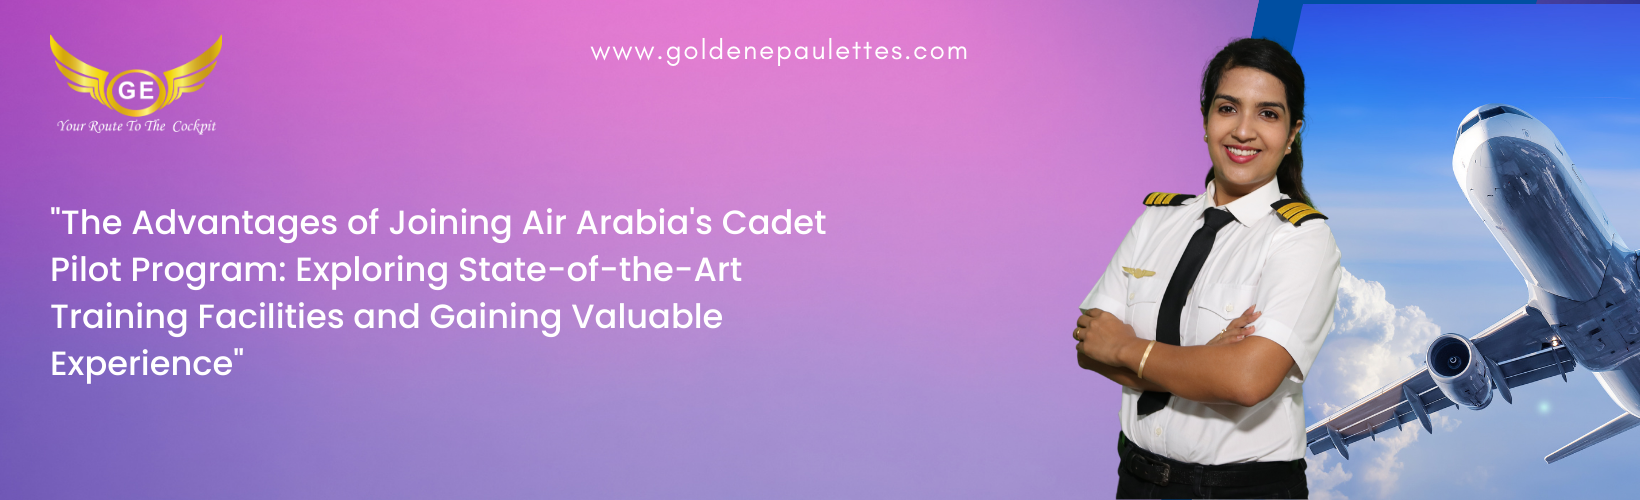 The Cost of the Air Arabia Cadet Pilot Program